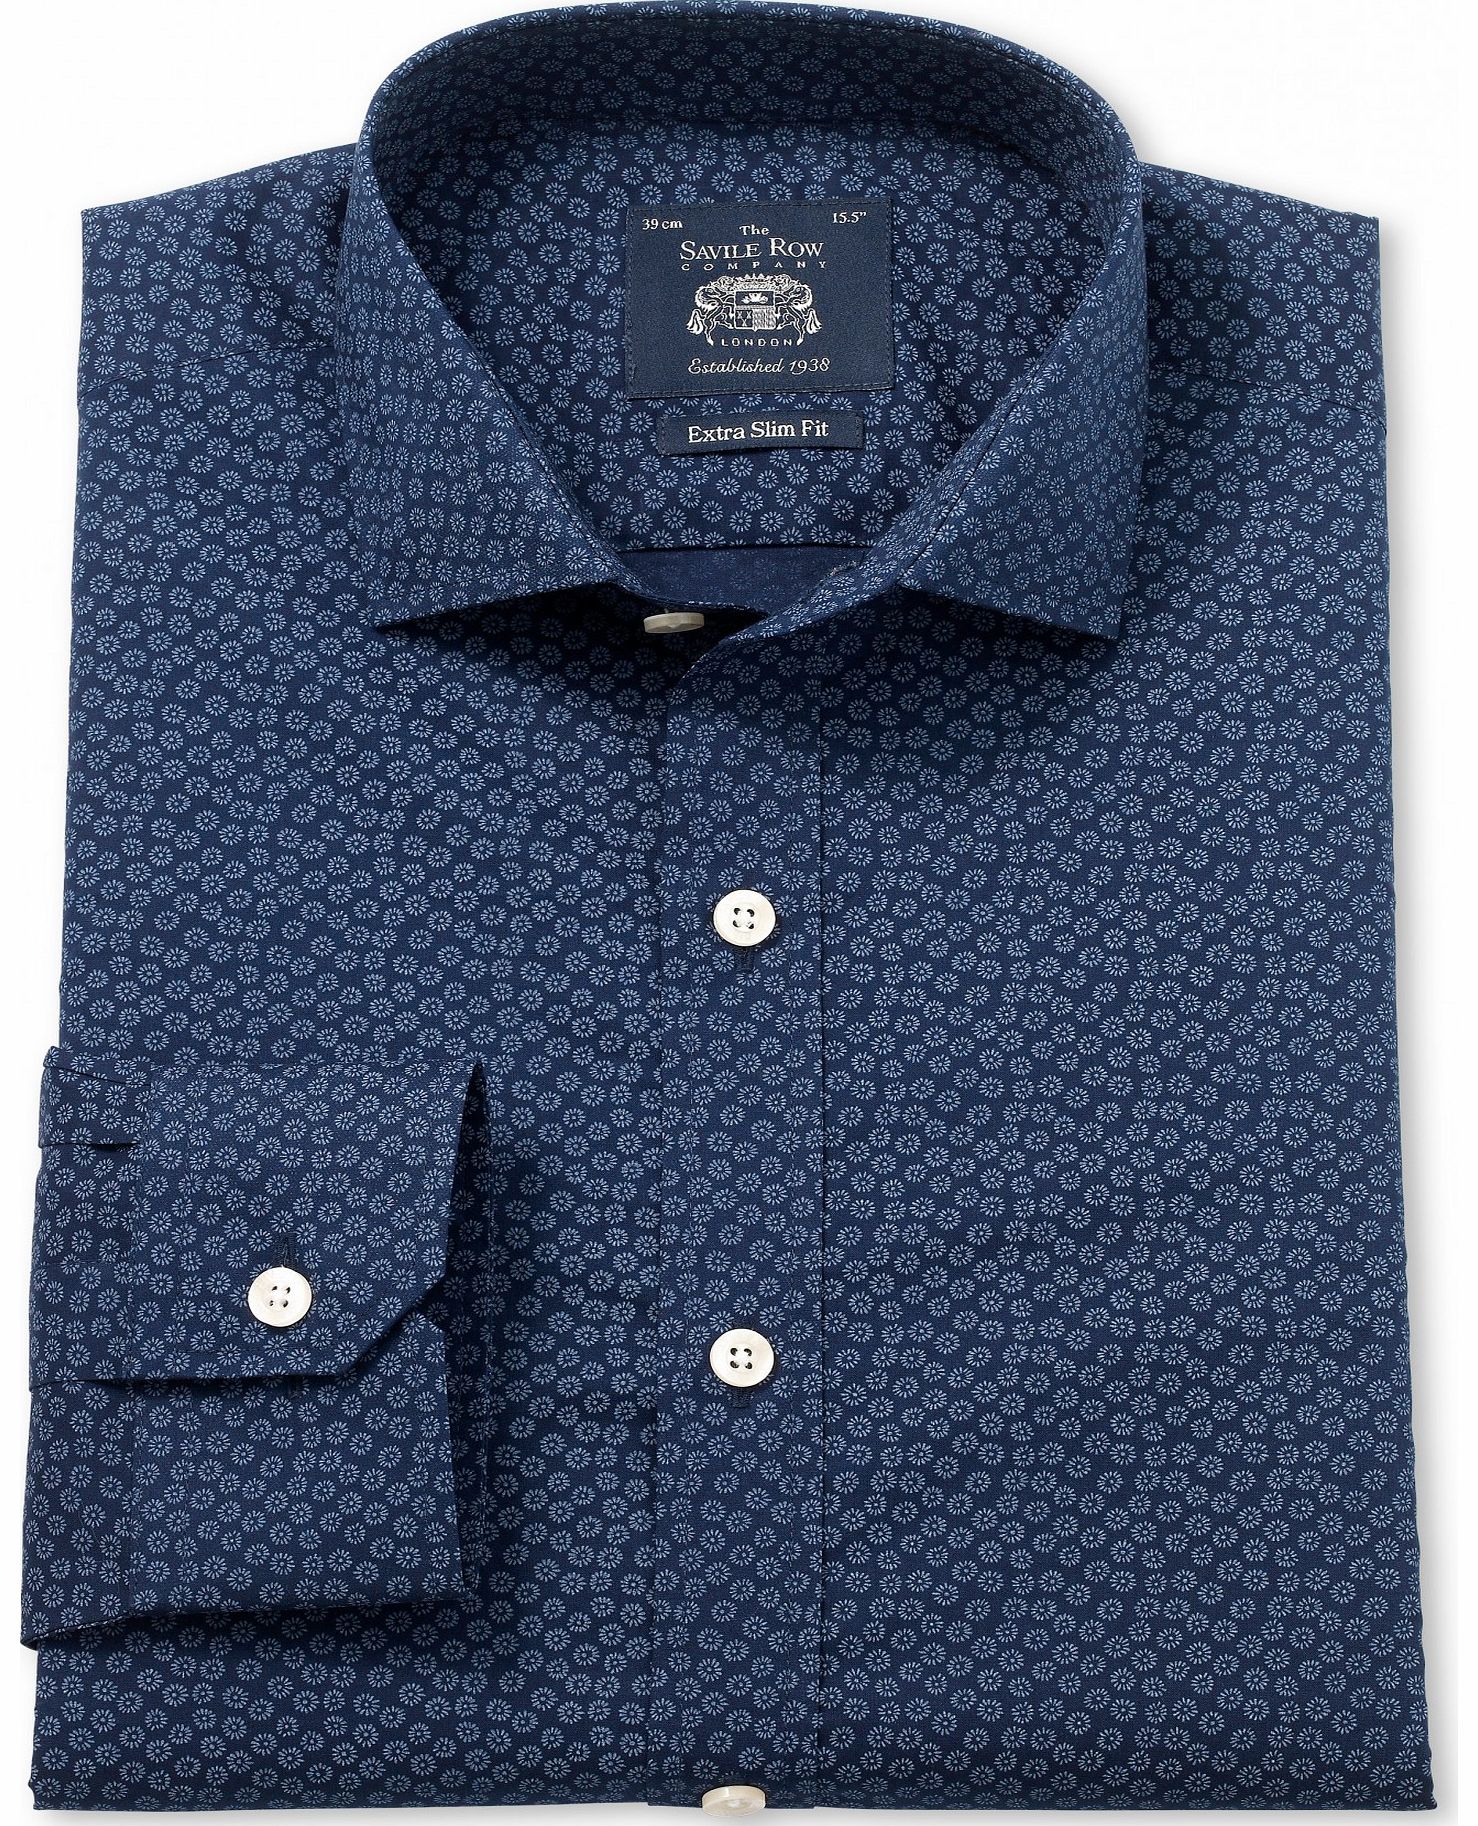 Savile Row Company Navy Blue Printed Extra Slim Fit Shirt 17``